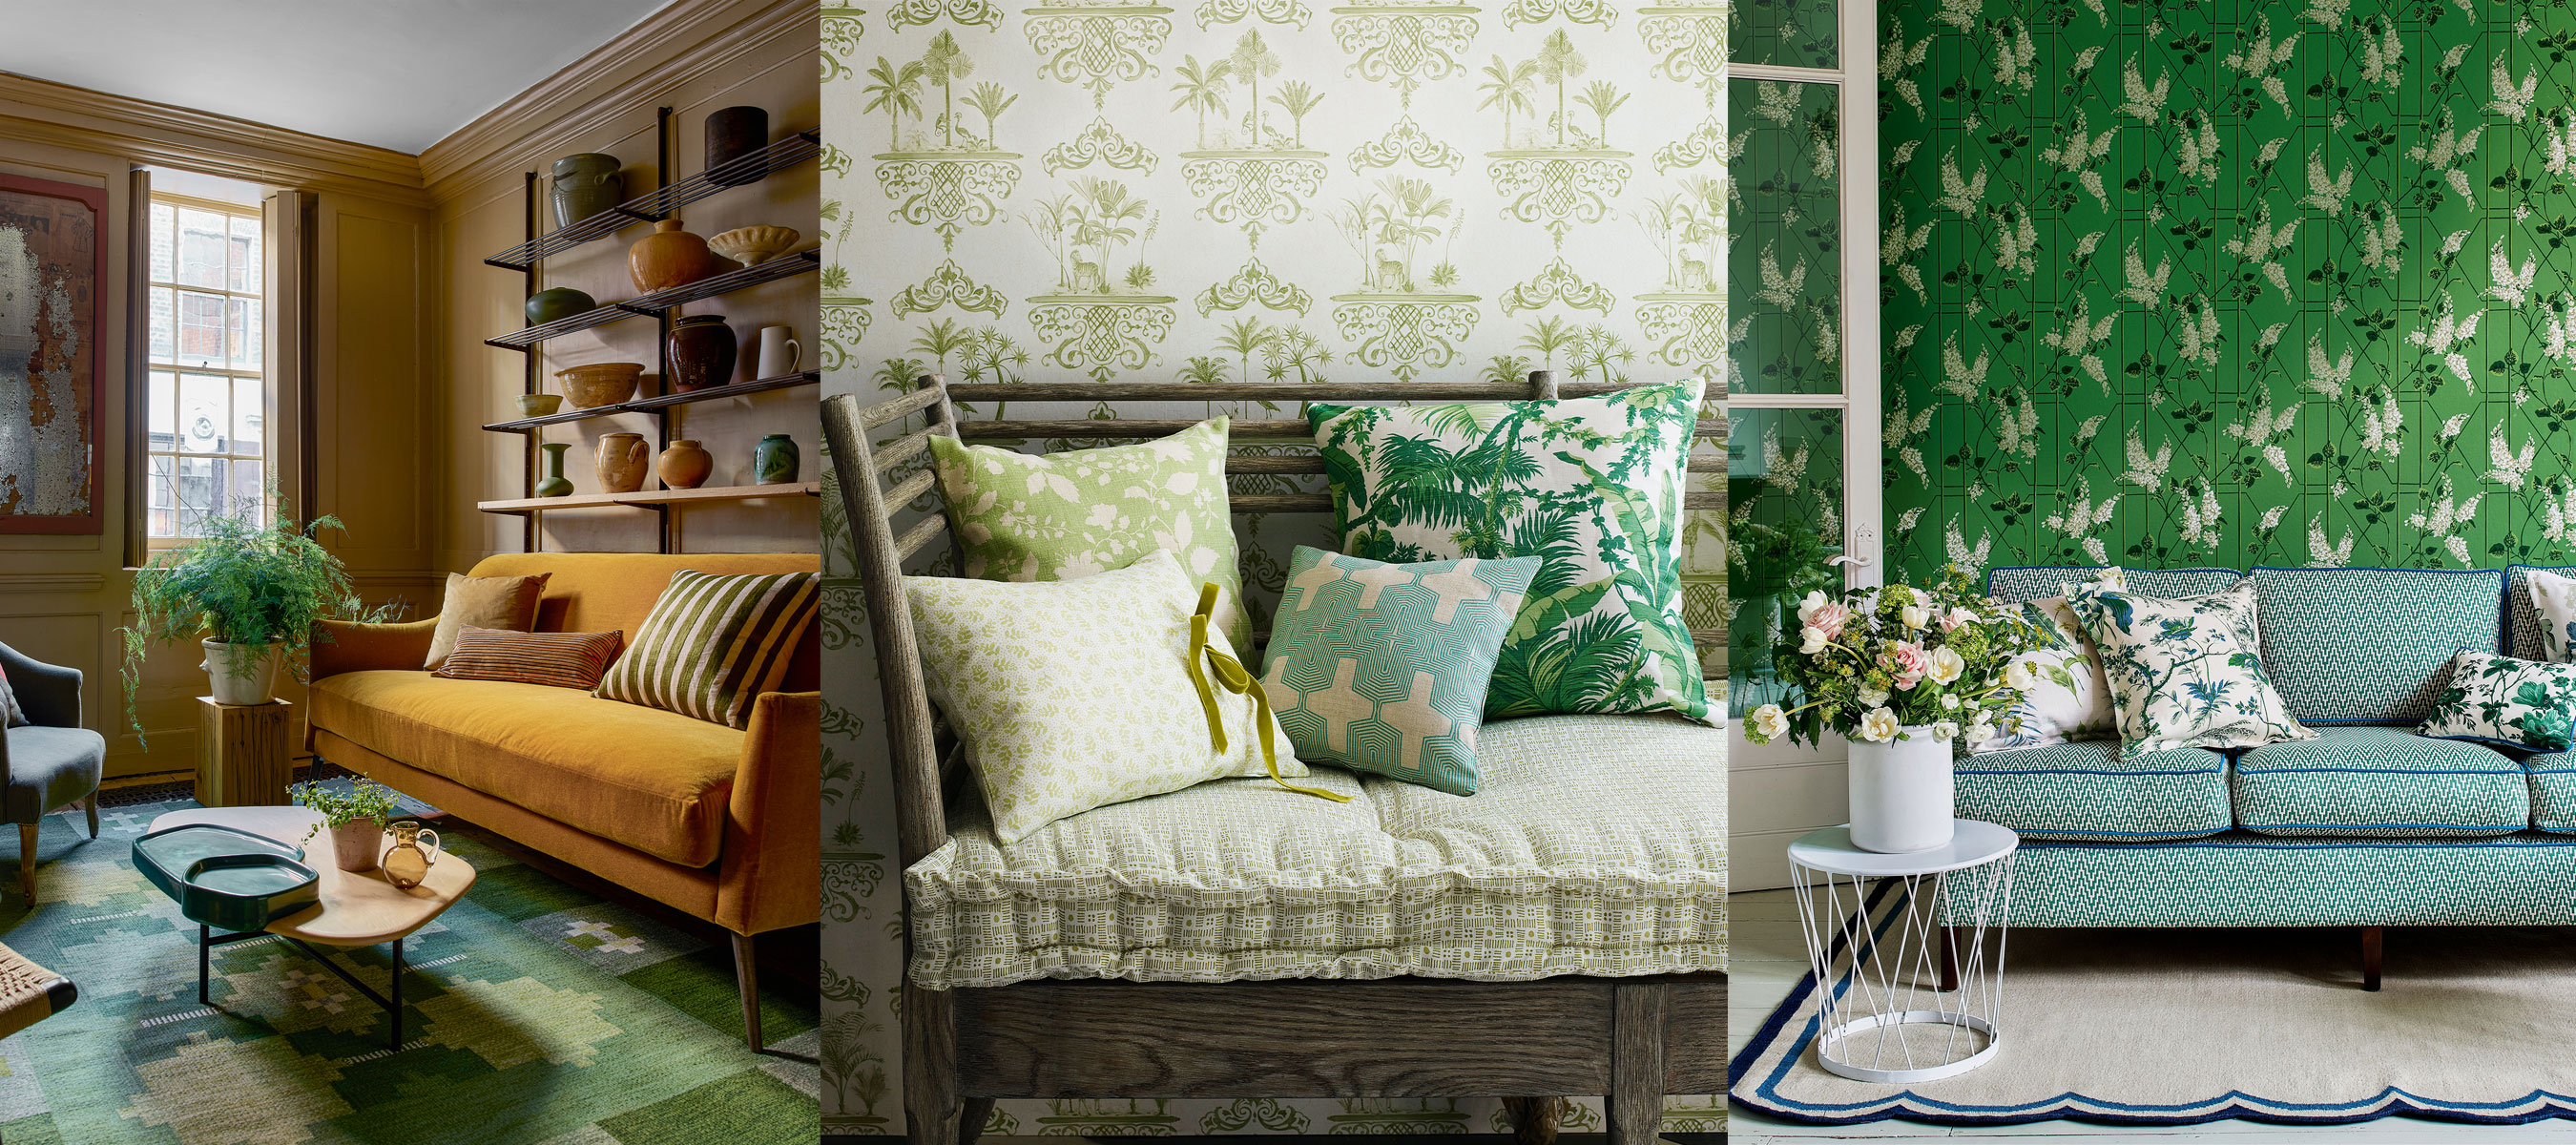 Green living room ideas: 15 gorgeous verdant schemes |